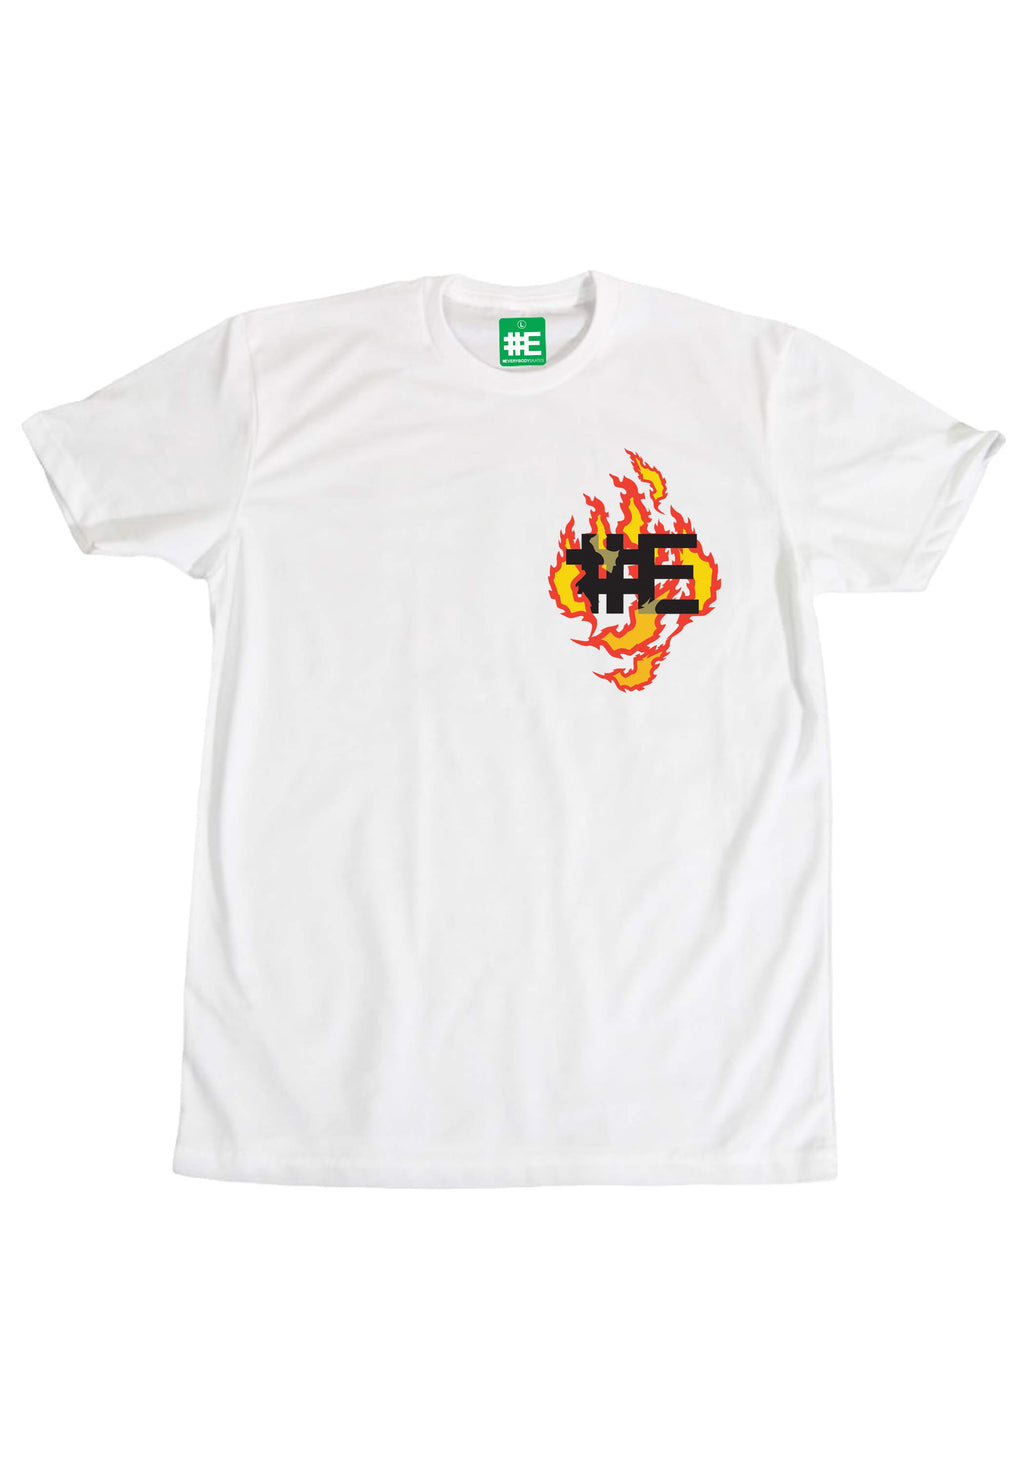 #E Flame Graphic T-shirt